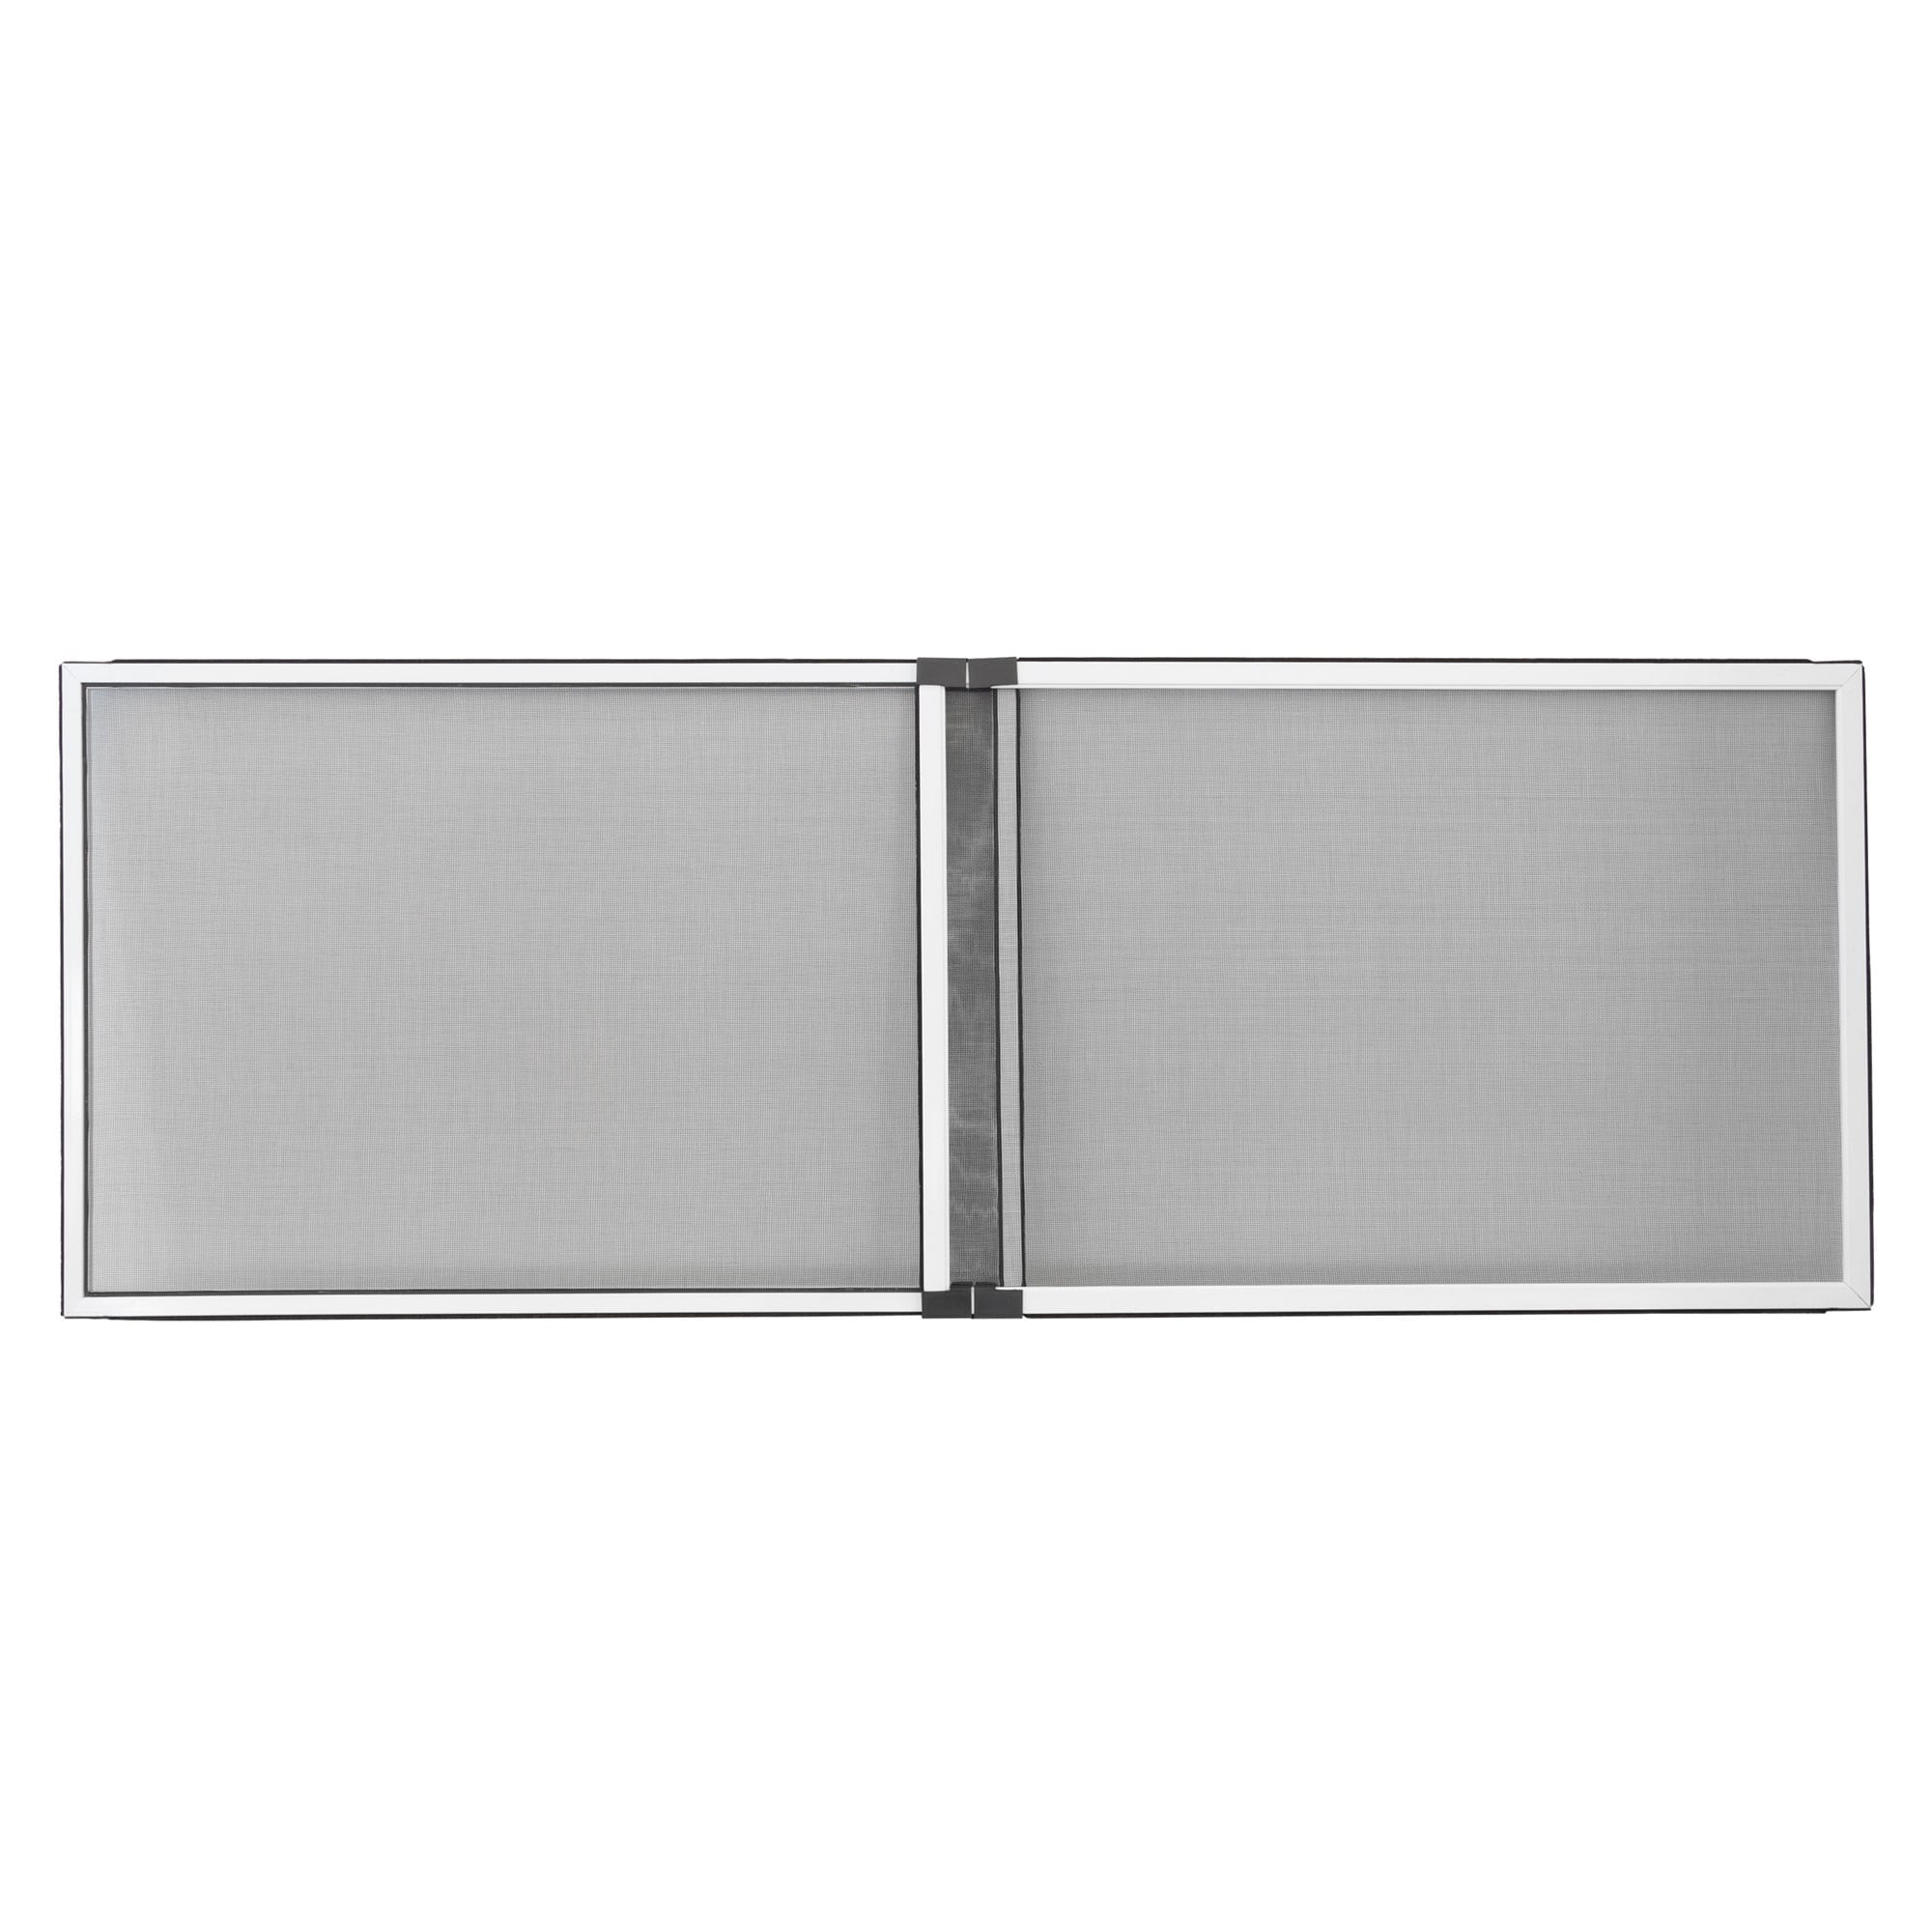 JAROLIFT Moustiquaire avec cadre réglable aluminium fenêtre portes sans percer JAROLIFT 